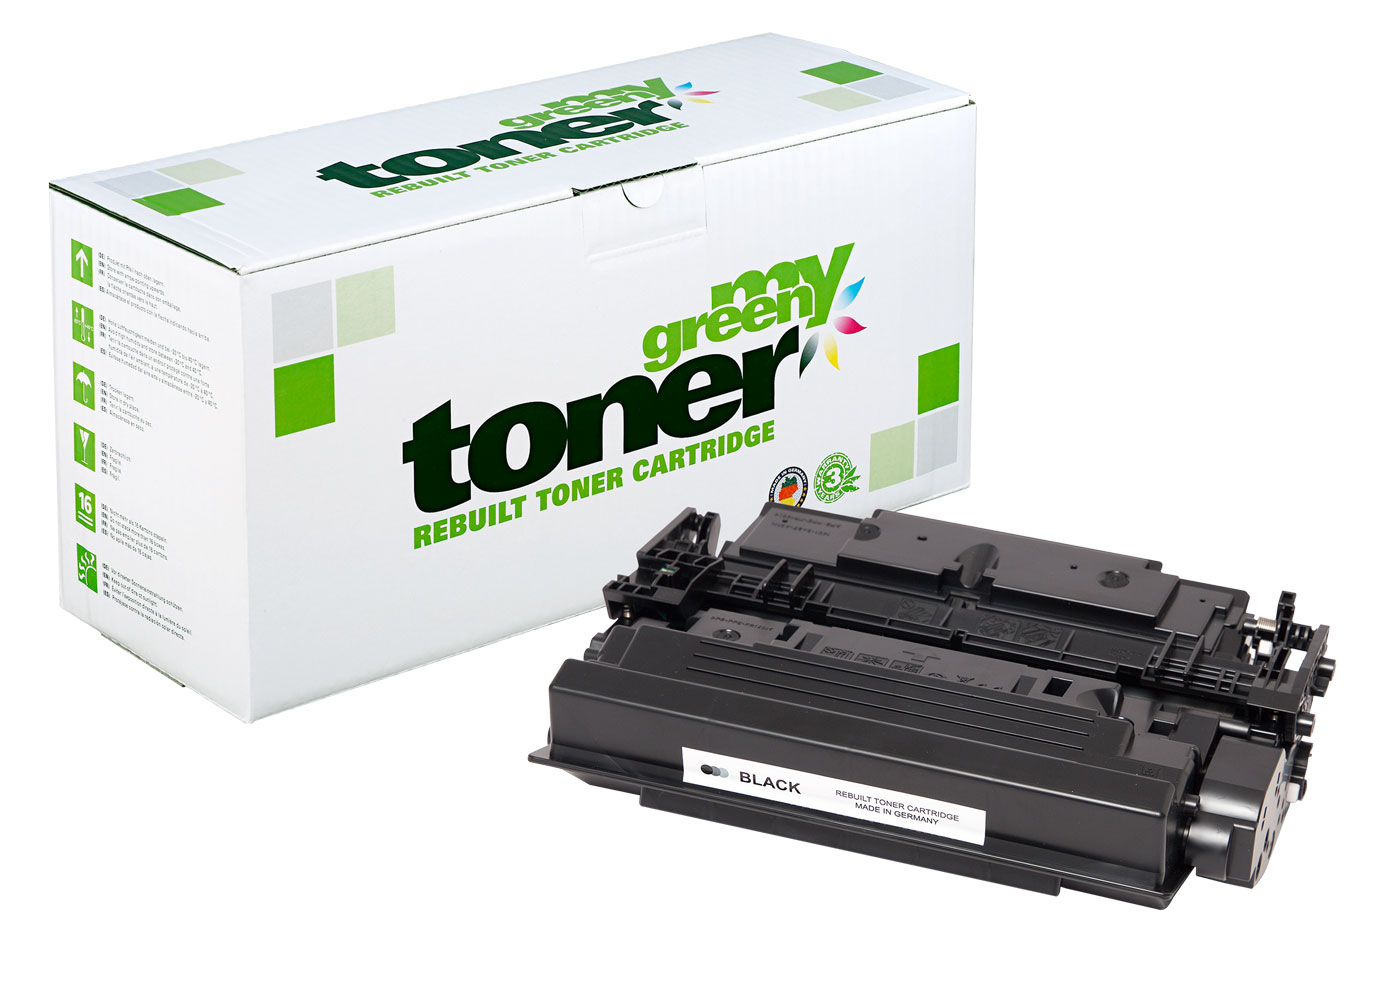 Rebuilt toner cartridge for HP LaserJet Managed MFP E52645